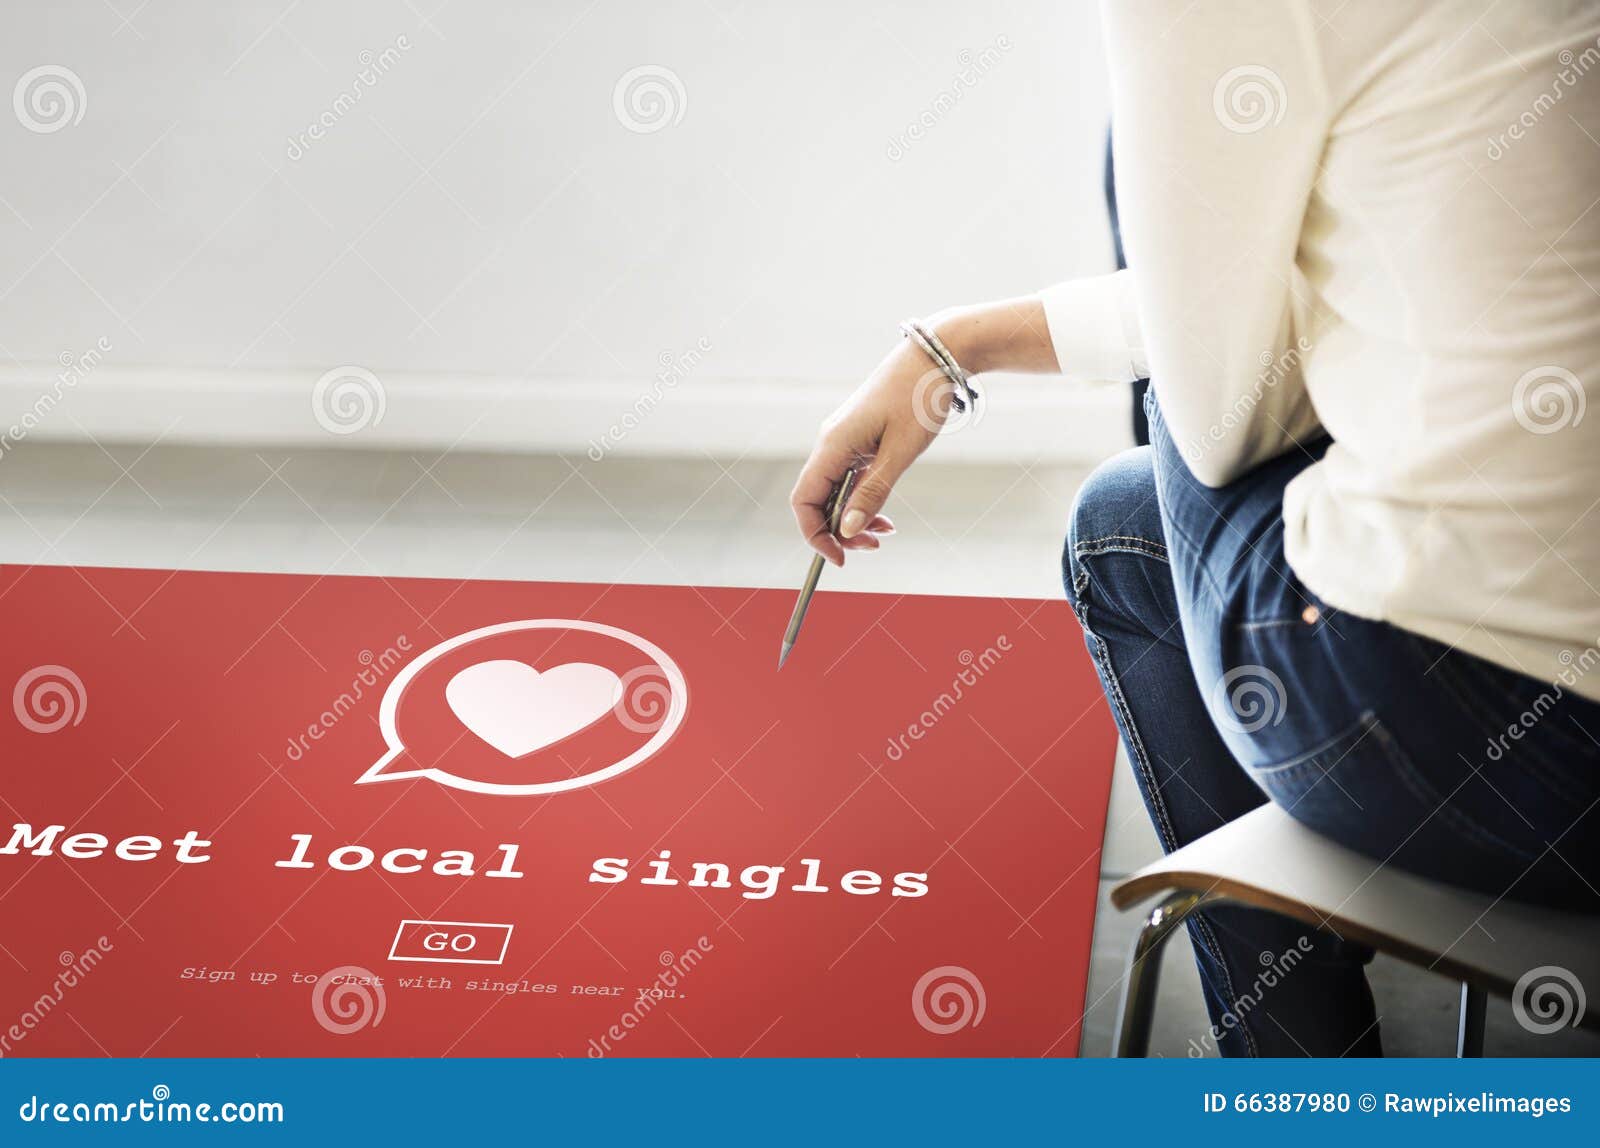 meet local singles dating valentine romance heart love passion c